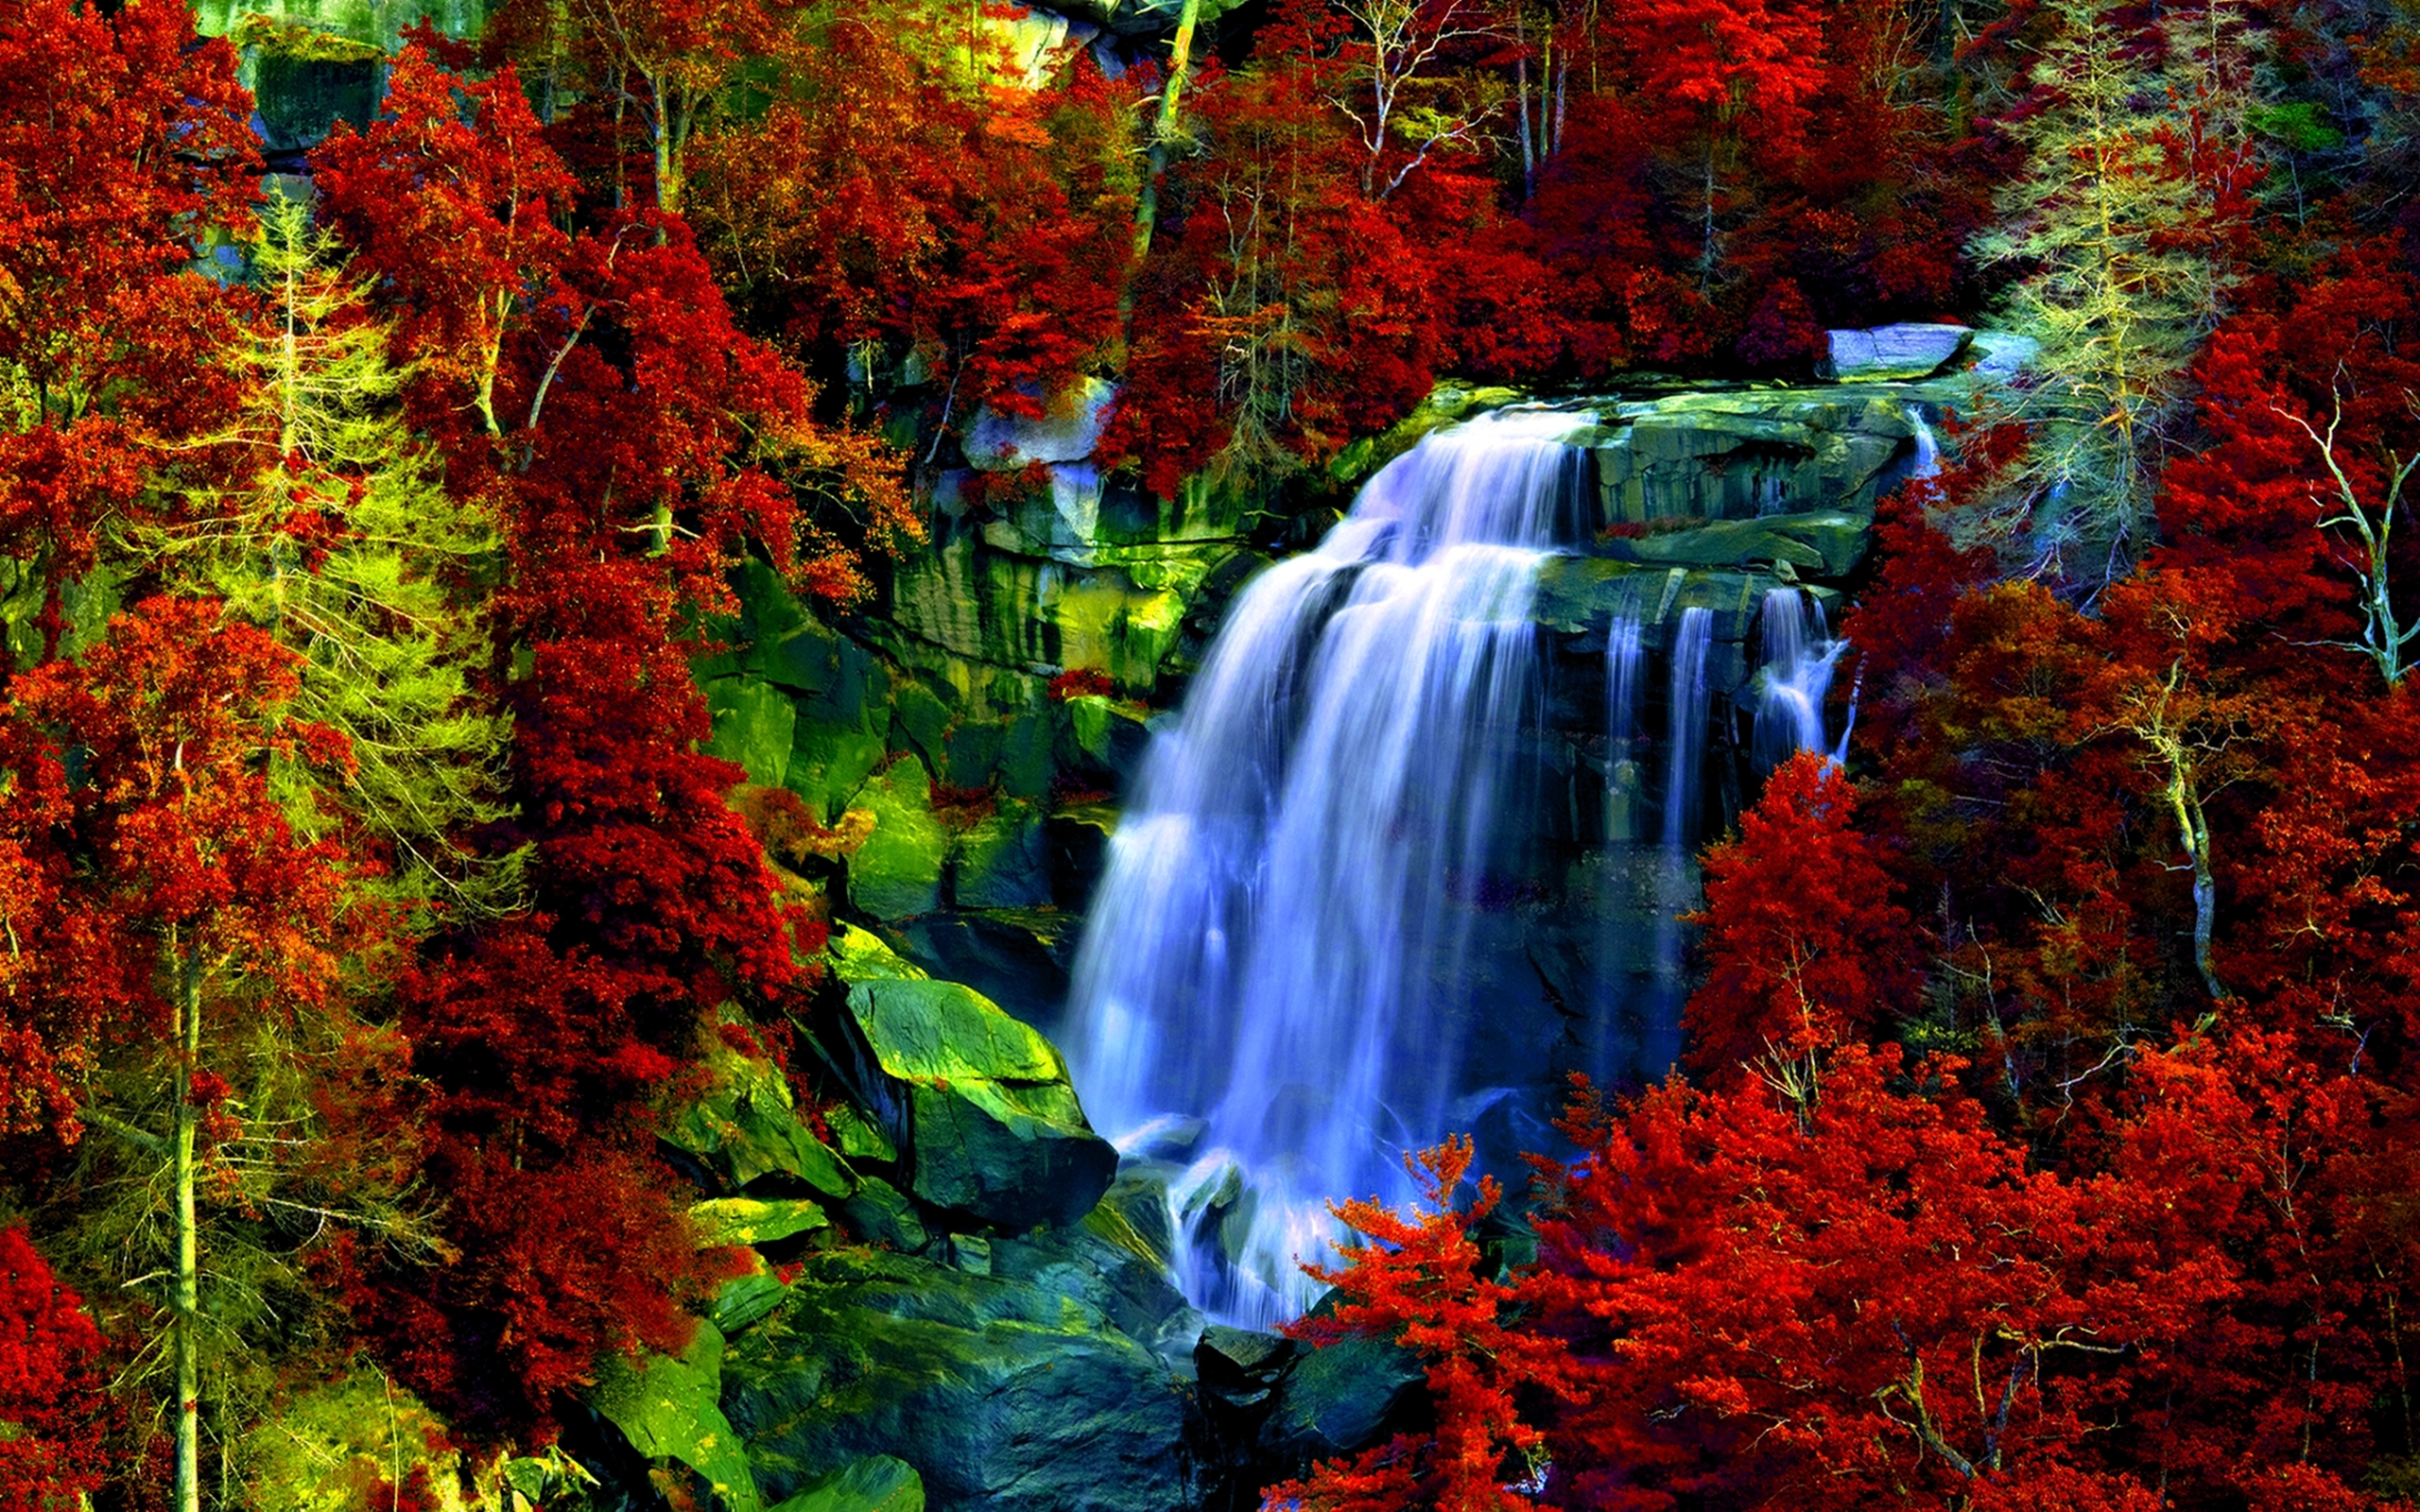 Обои на телефон живой водопад. Табиат манзараси. Природа. Красивые водопады. Живая природа водопады.